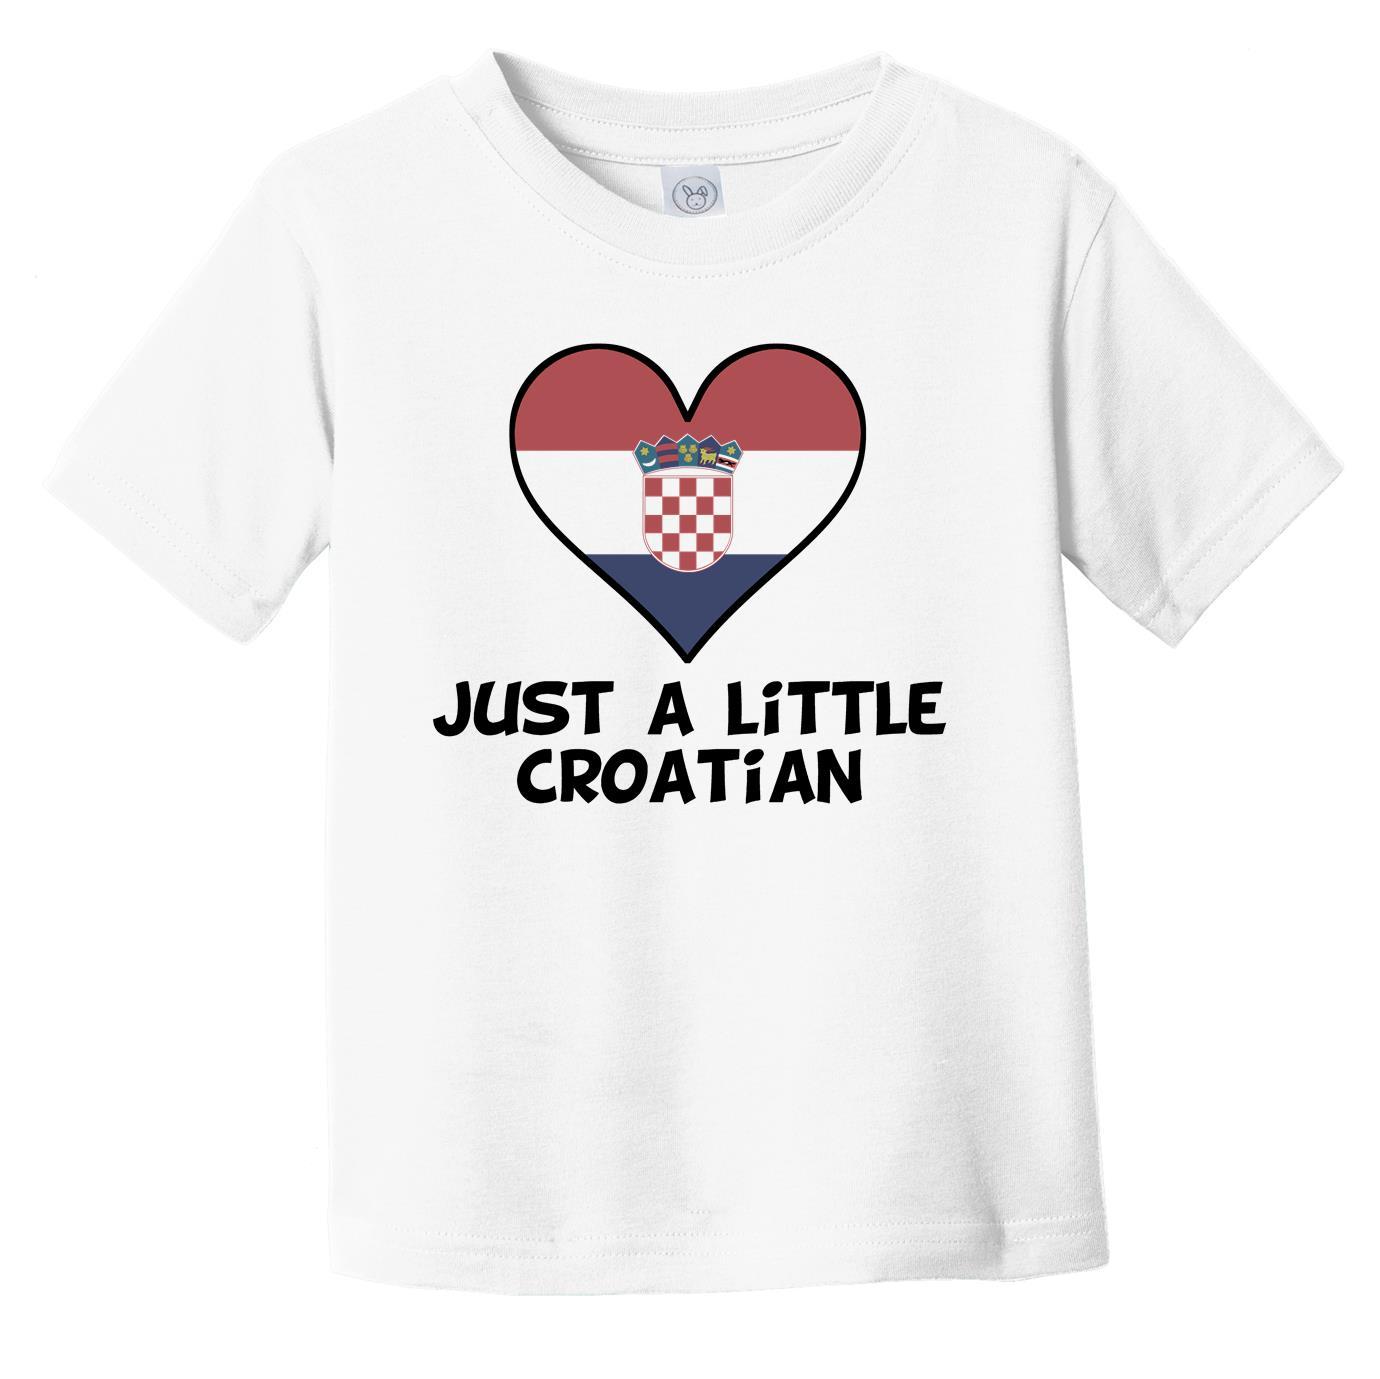 Just A Little Croatian T-Shirt - Funny Croatia Flag Infant Toddler Shirt